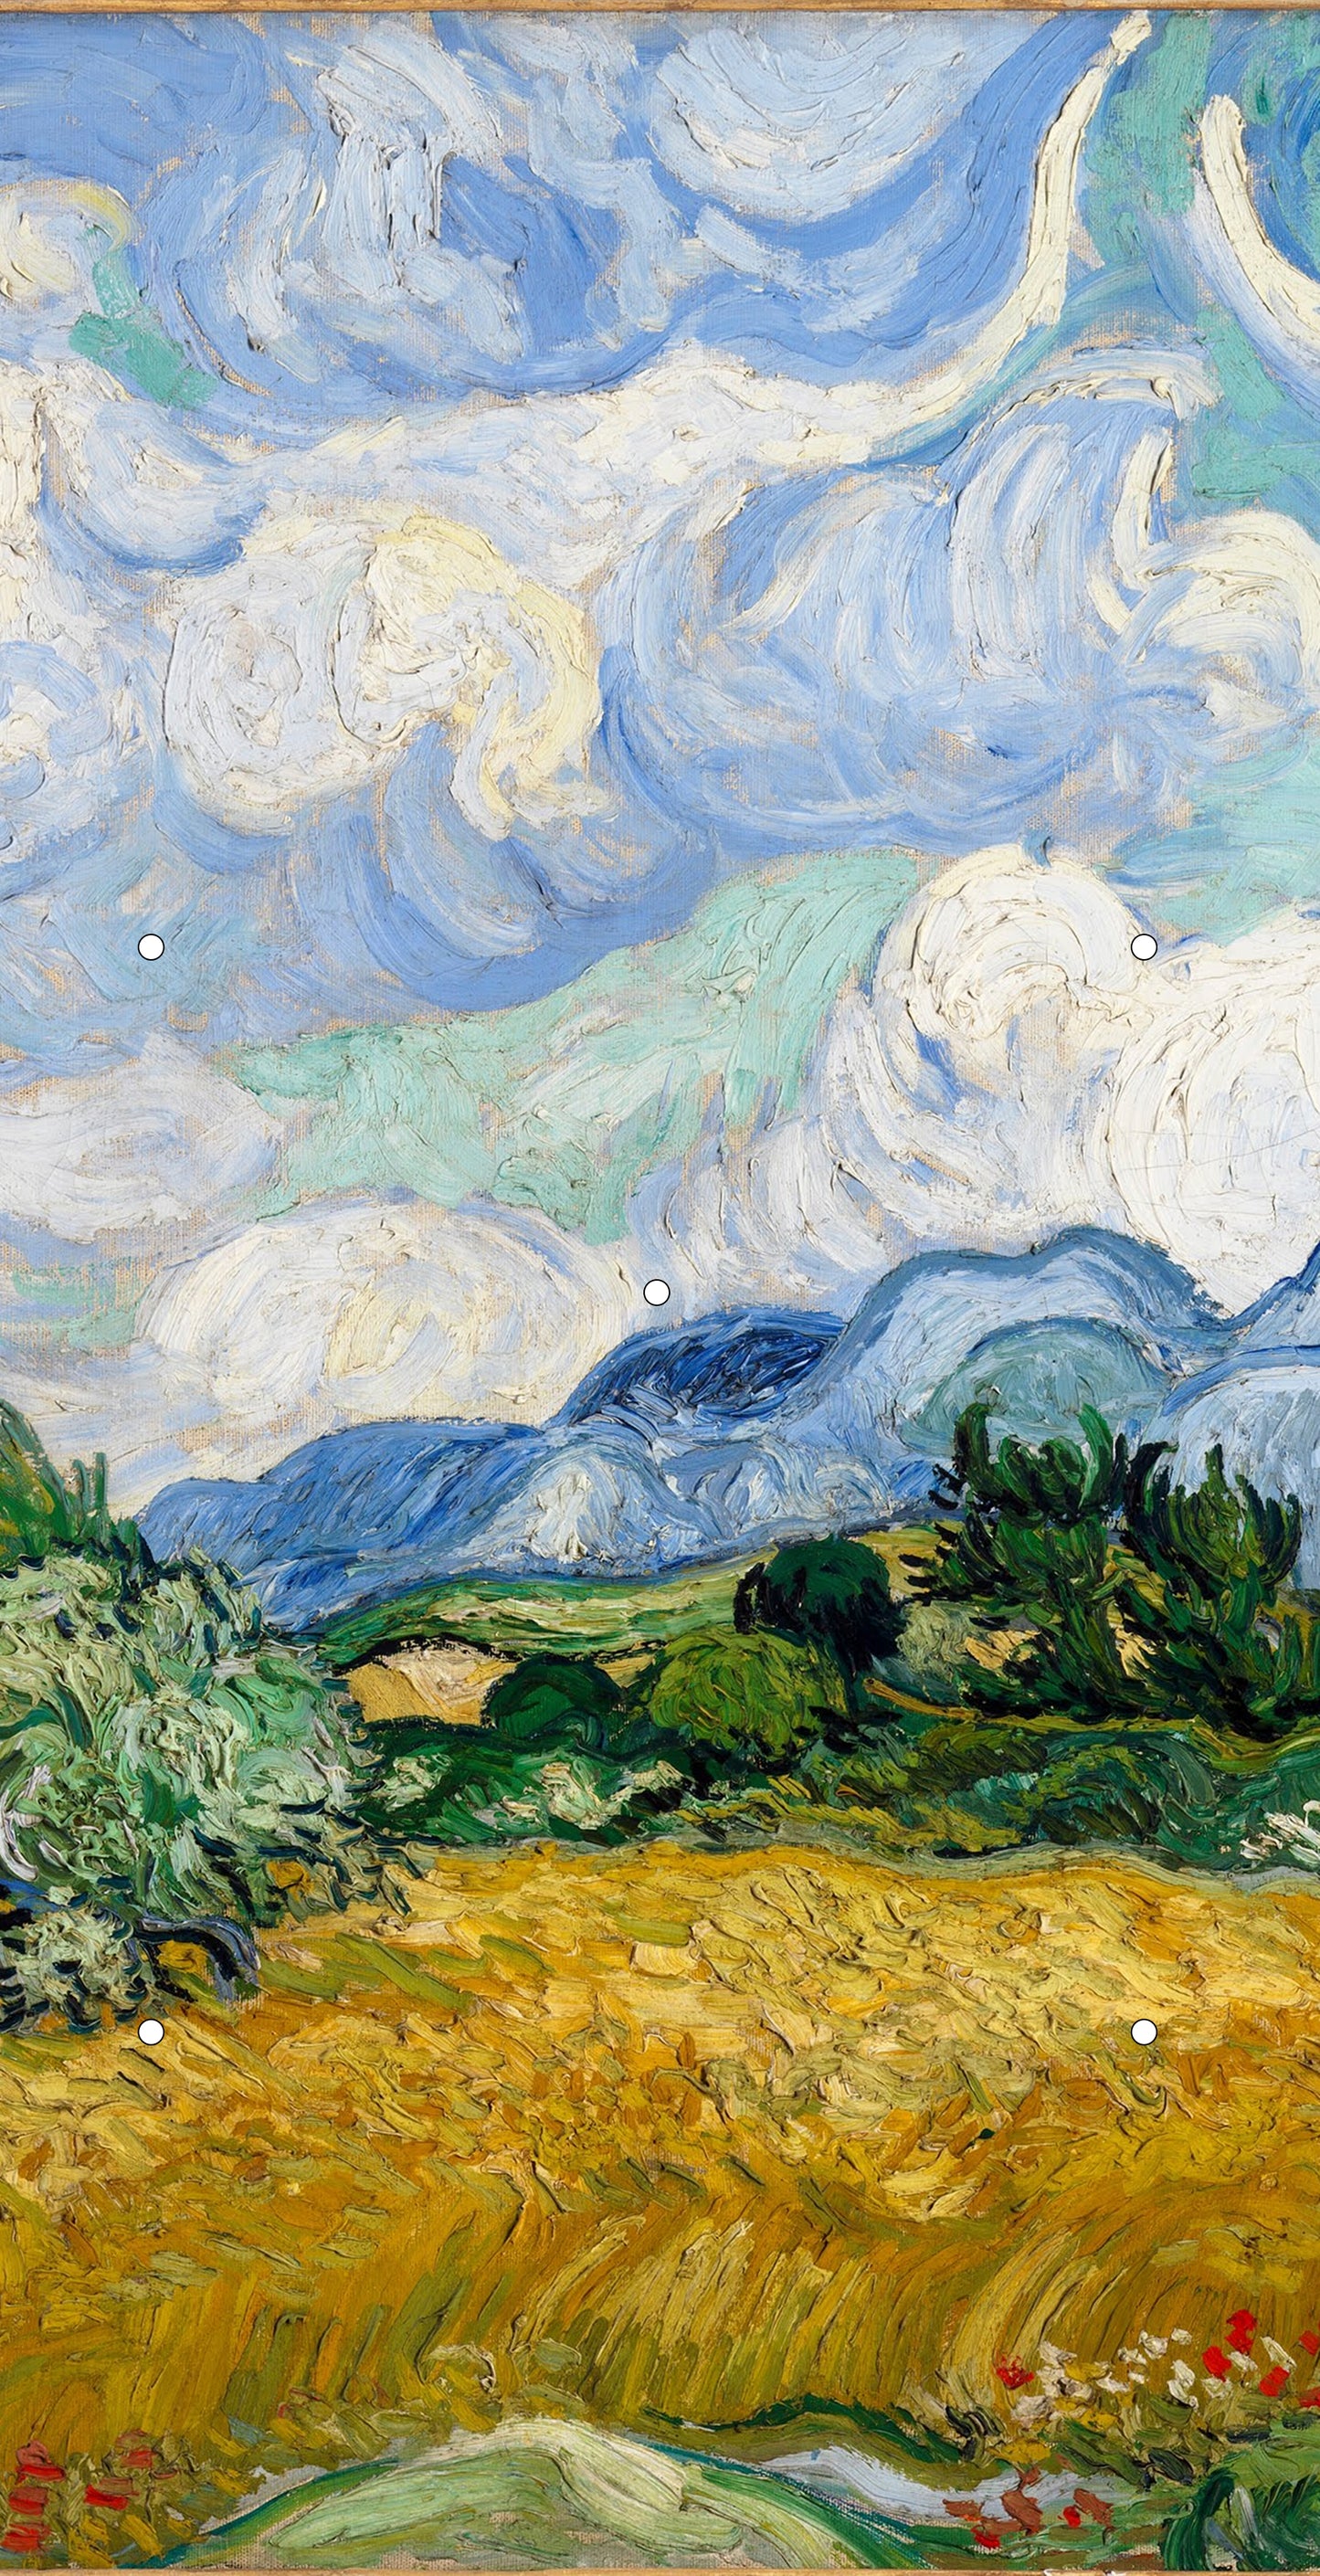 van Gogh: Wheatfield Birdhouse